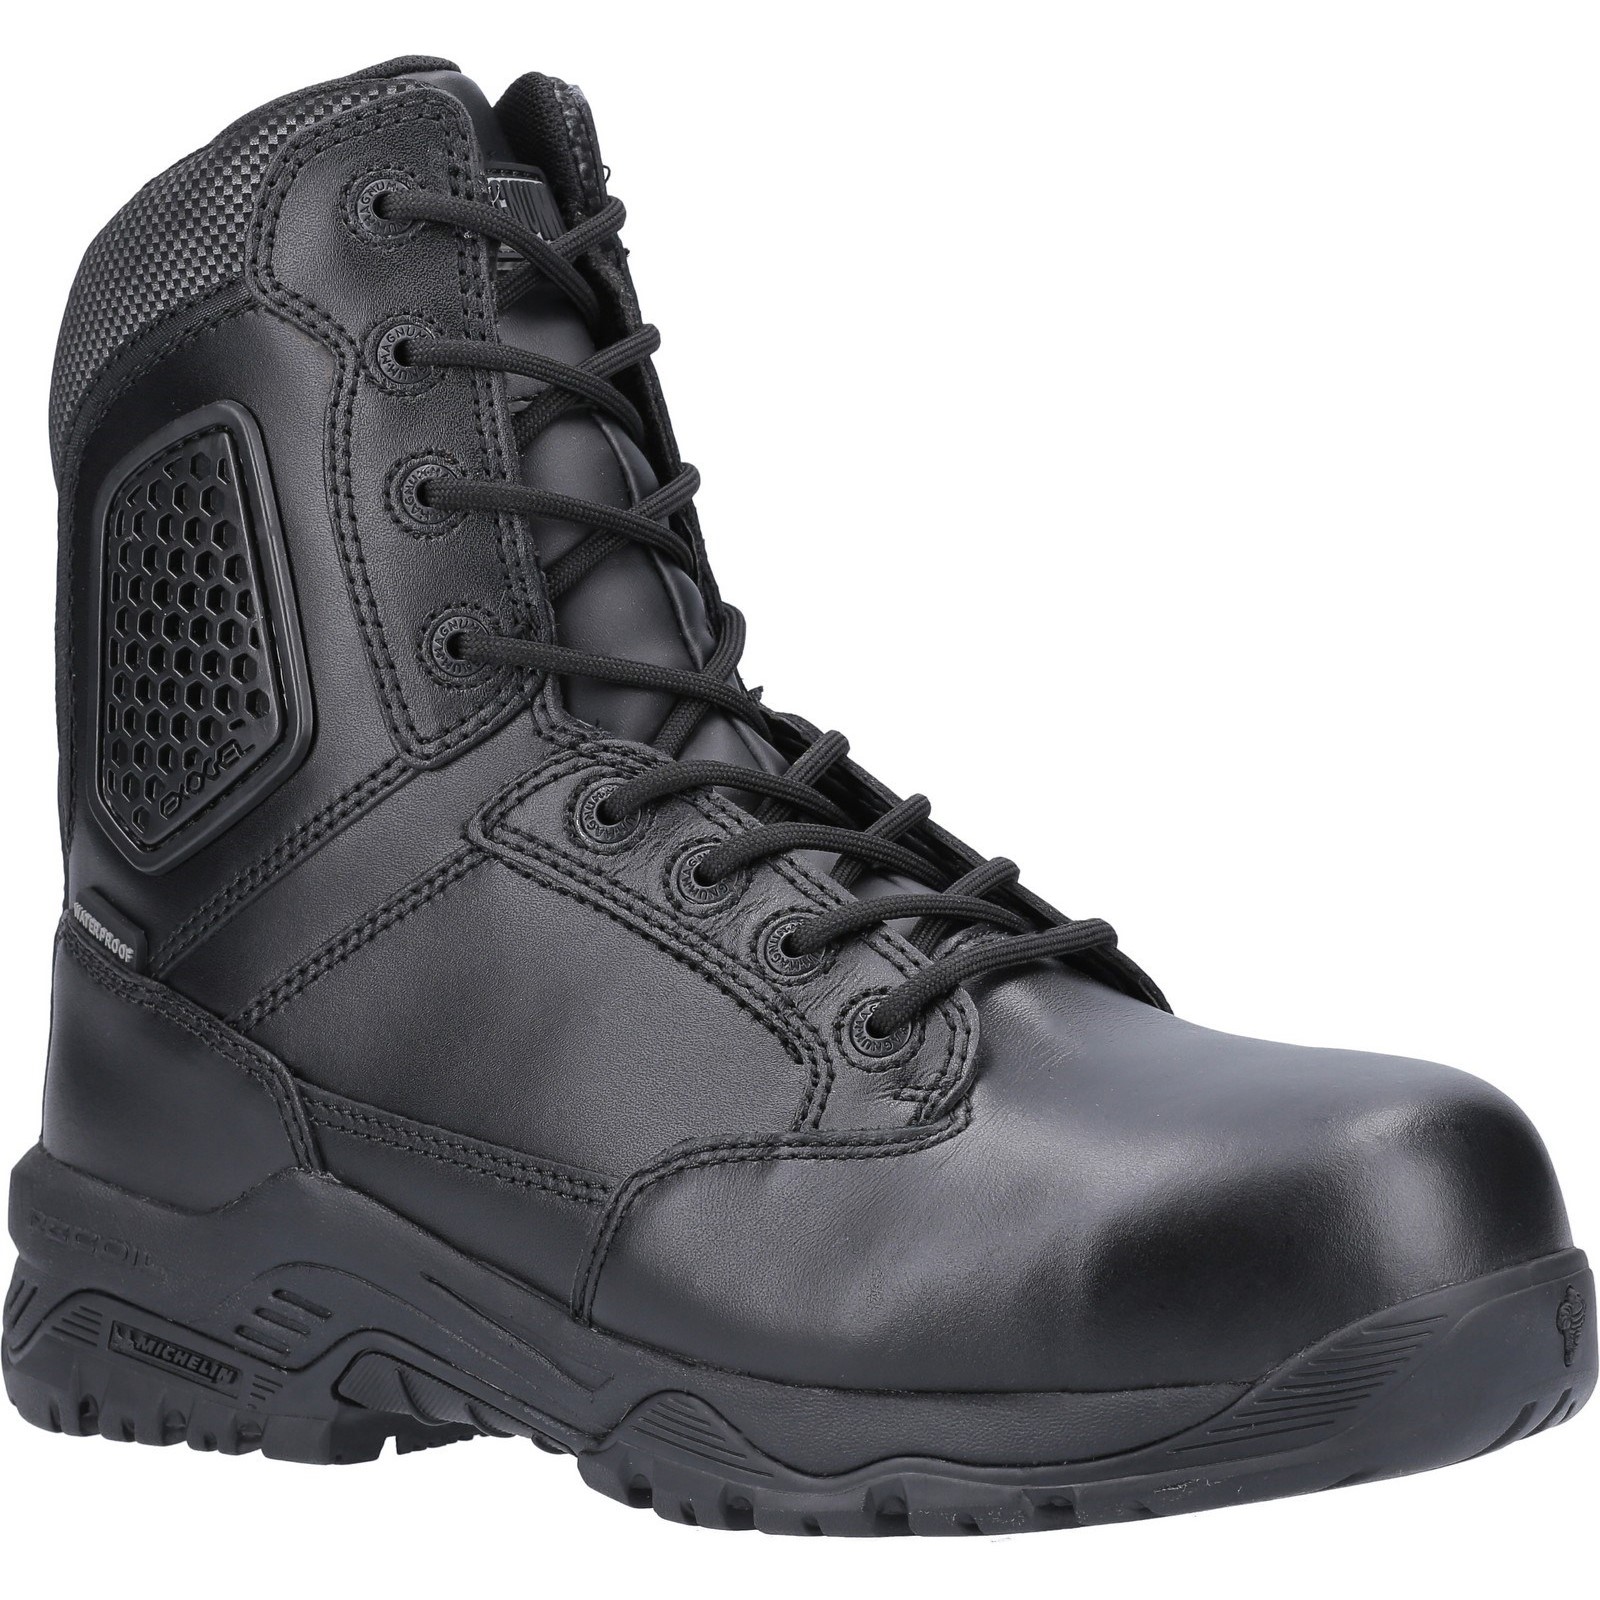 Strike Force 8.0 Uniform Safety Boots